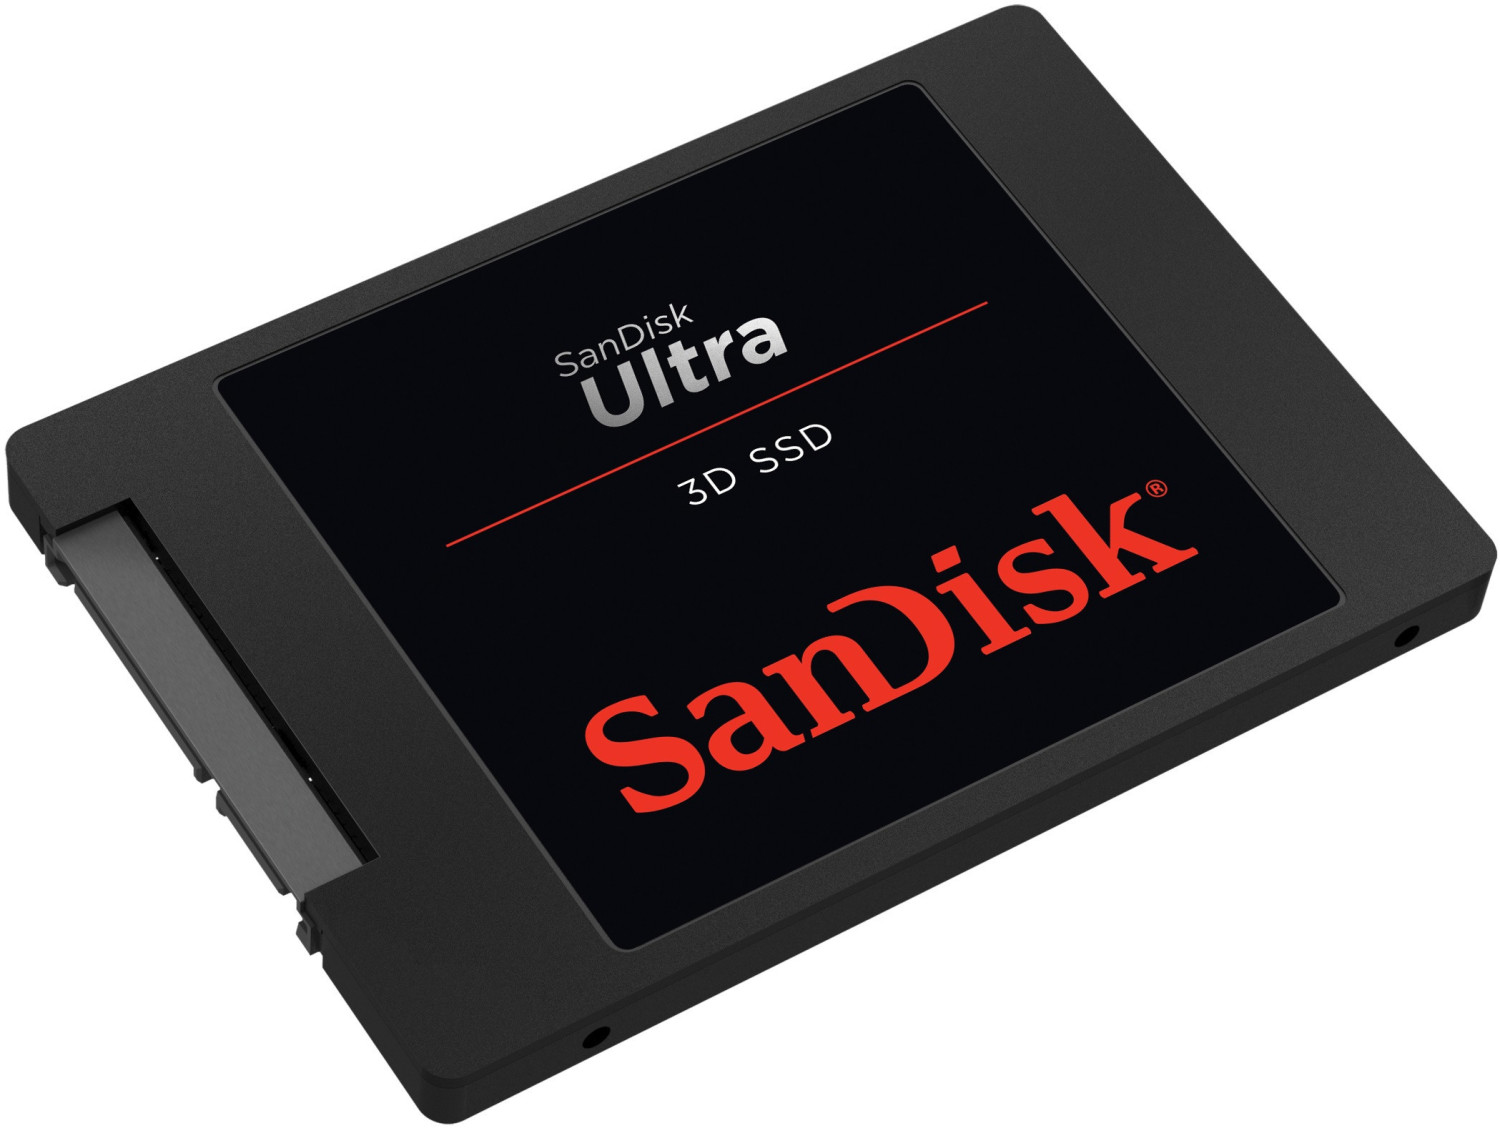 Amazon Prime - SanDisk Ultra 3D SSD 1 TB SSD (intern, 3D NAND-Technologie, n-Cache 2.0-Technologie, 560 MB/s) für 83,99€